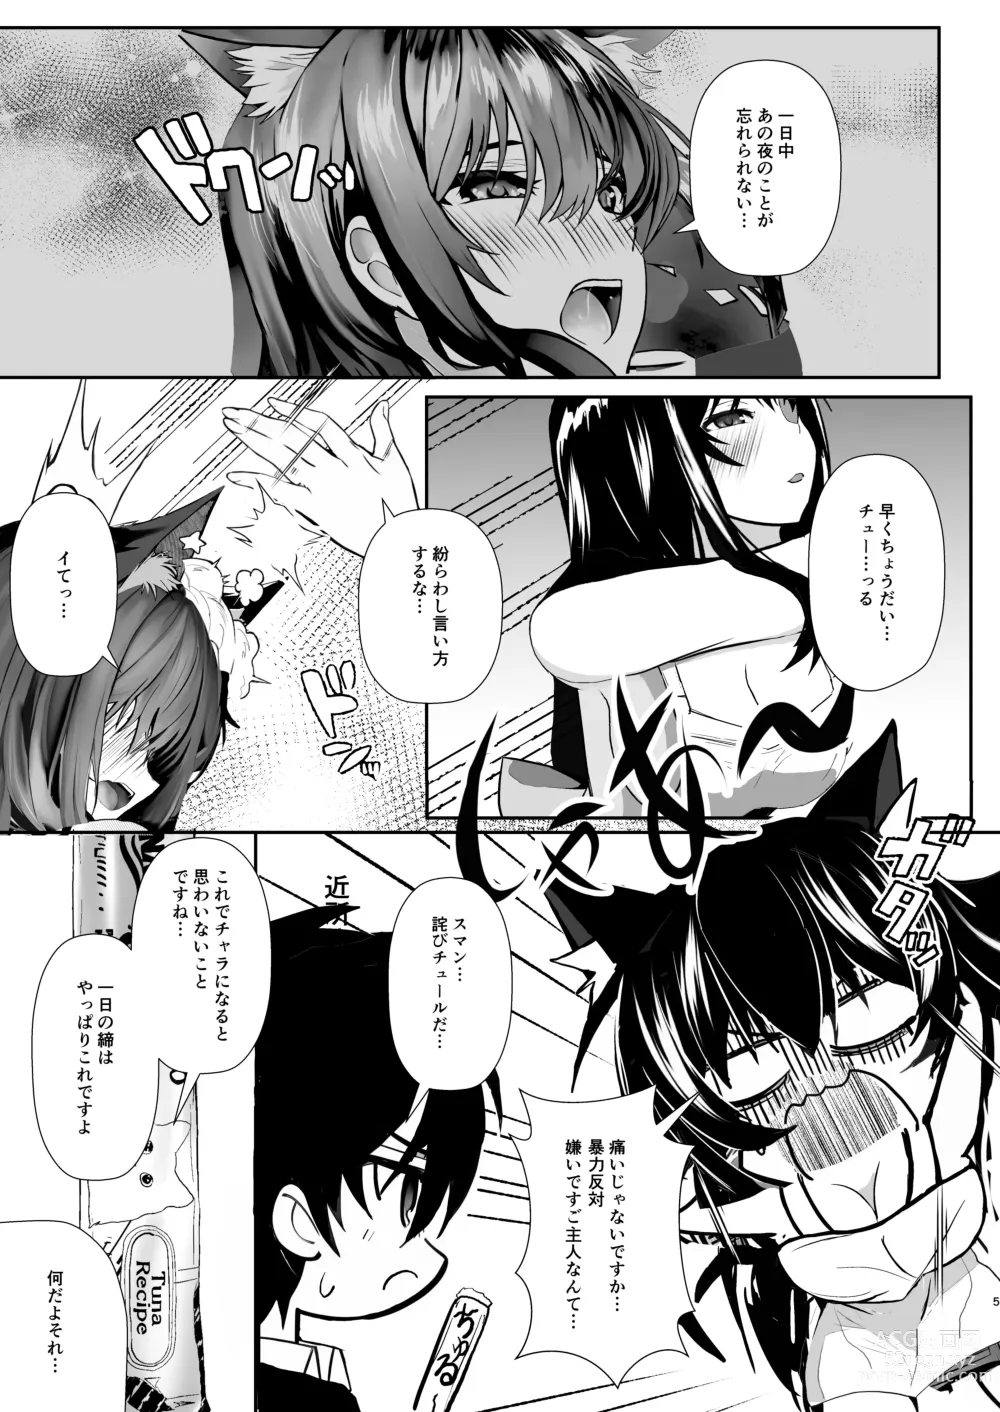 Page 5 of manga Pet na Kanojo